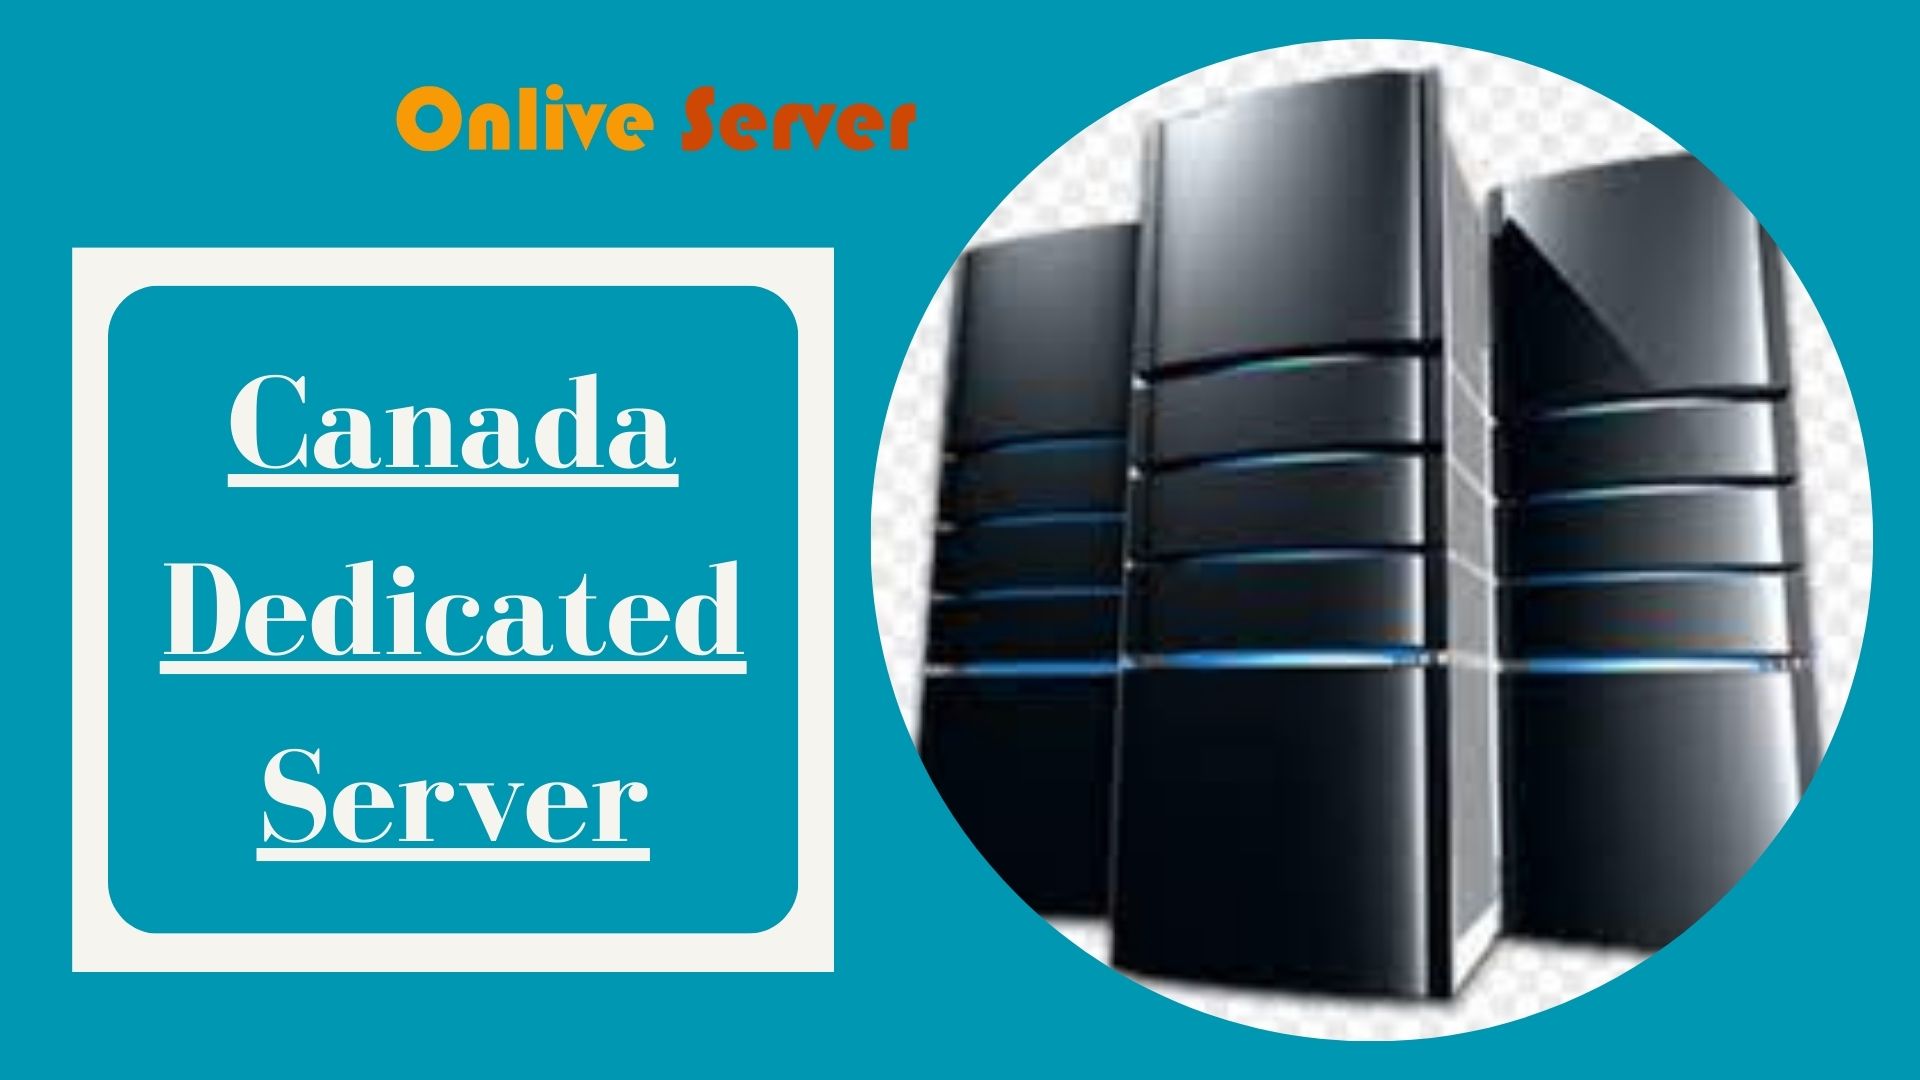 Canada Dedicatetd Server